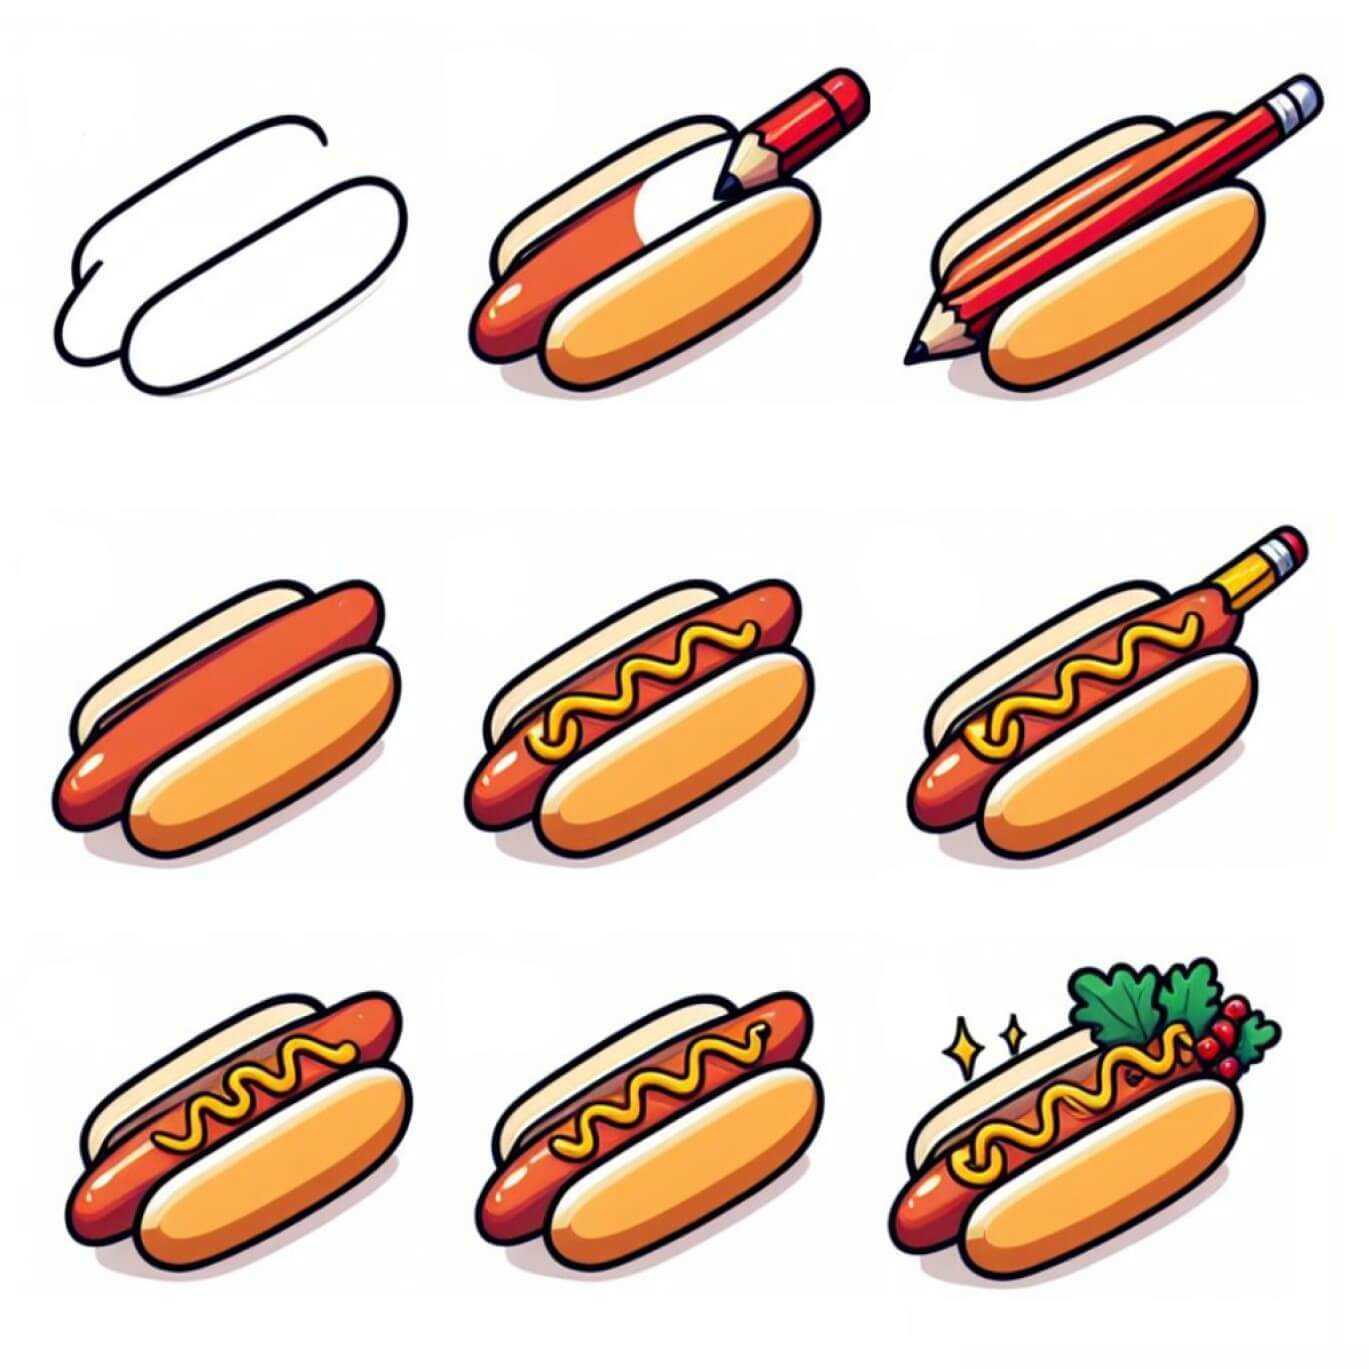 Hot dog iead 16 Drawing Ideas